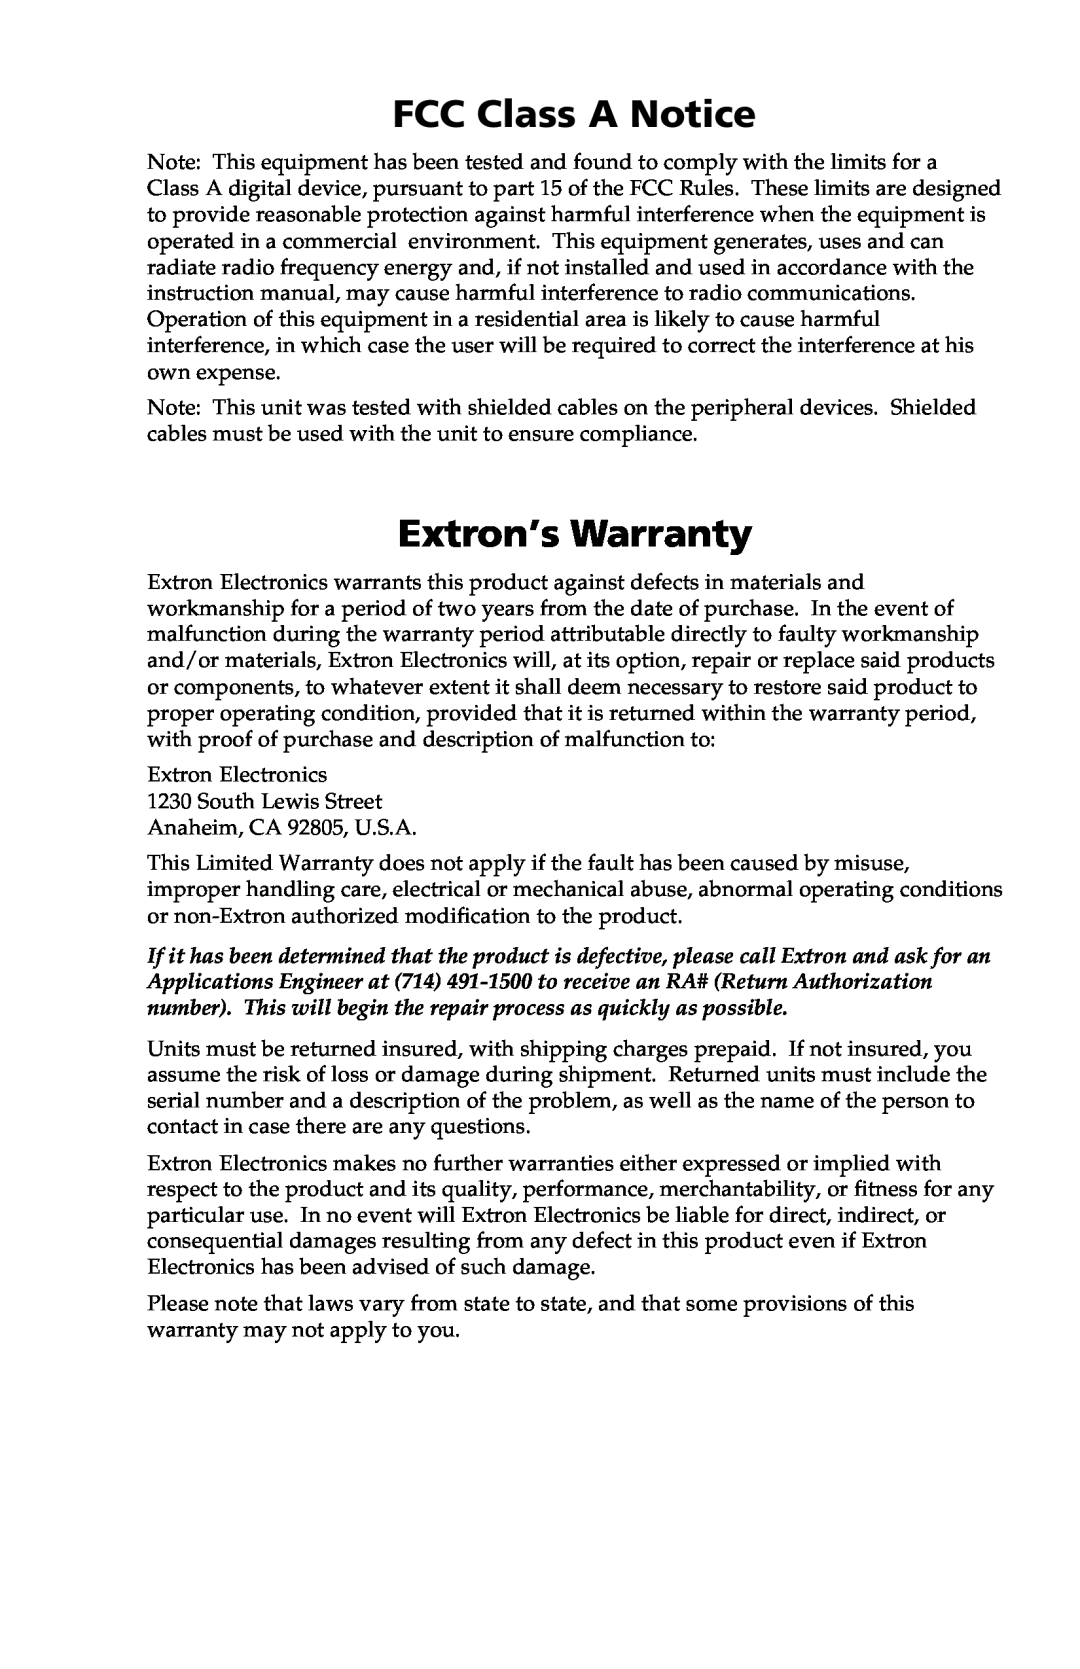 Extron electronic 150xi, 130xi, 134xi user manual FCC Class A Notice, Extron’s Warranty 